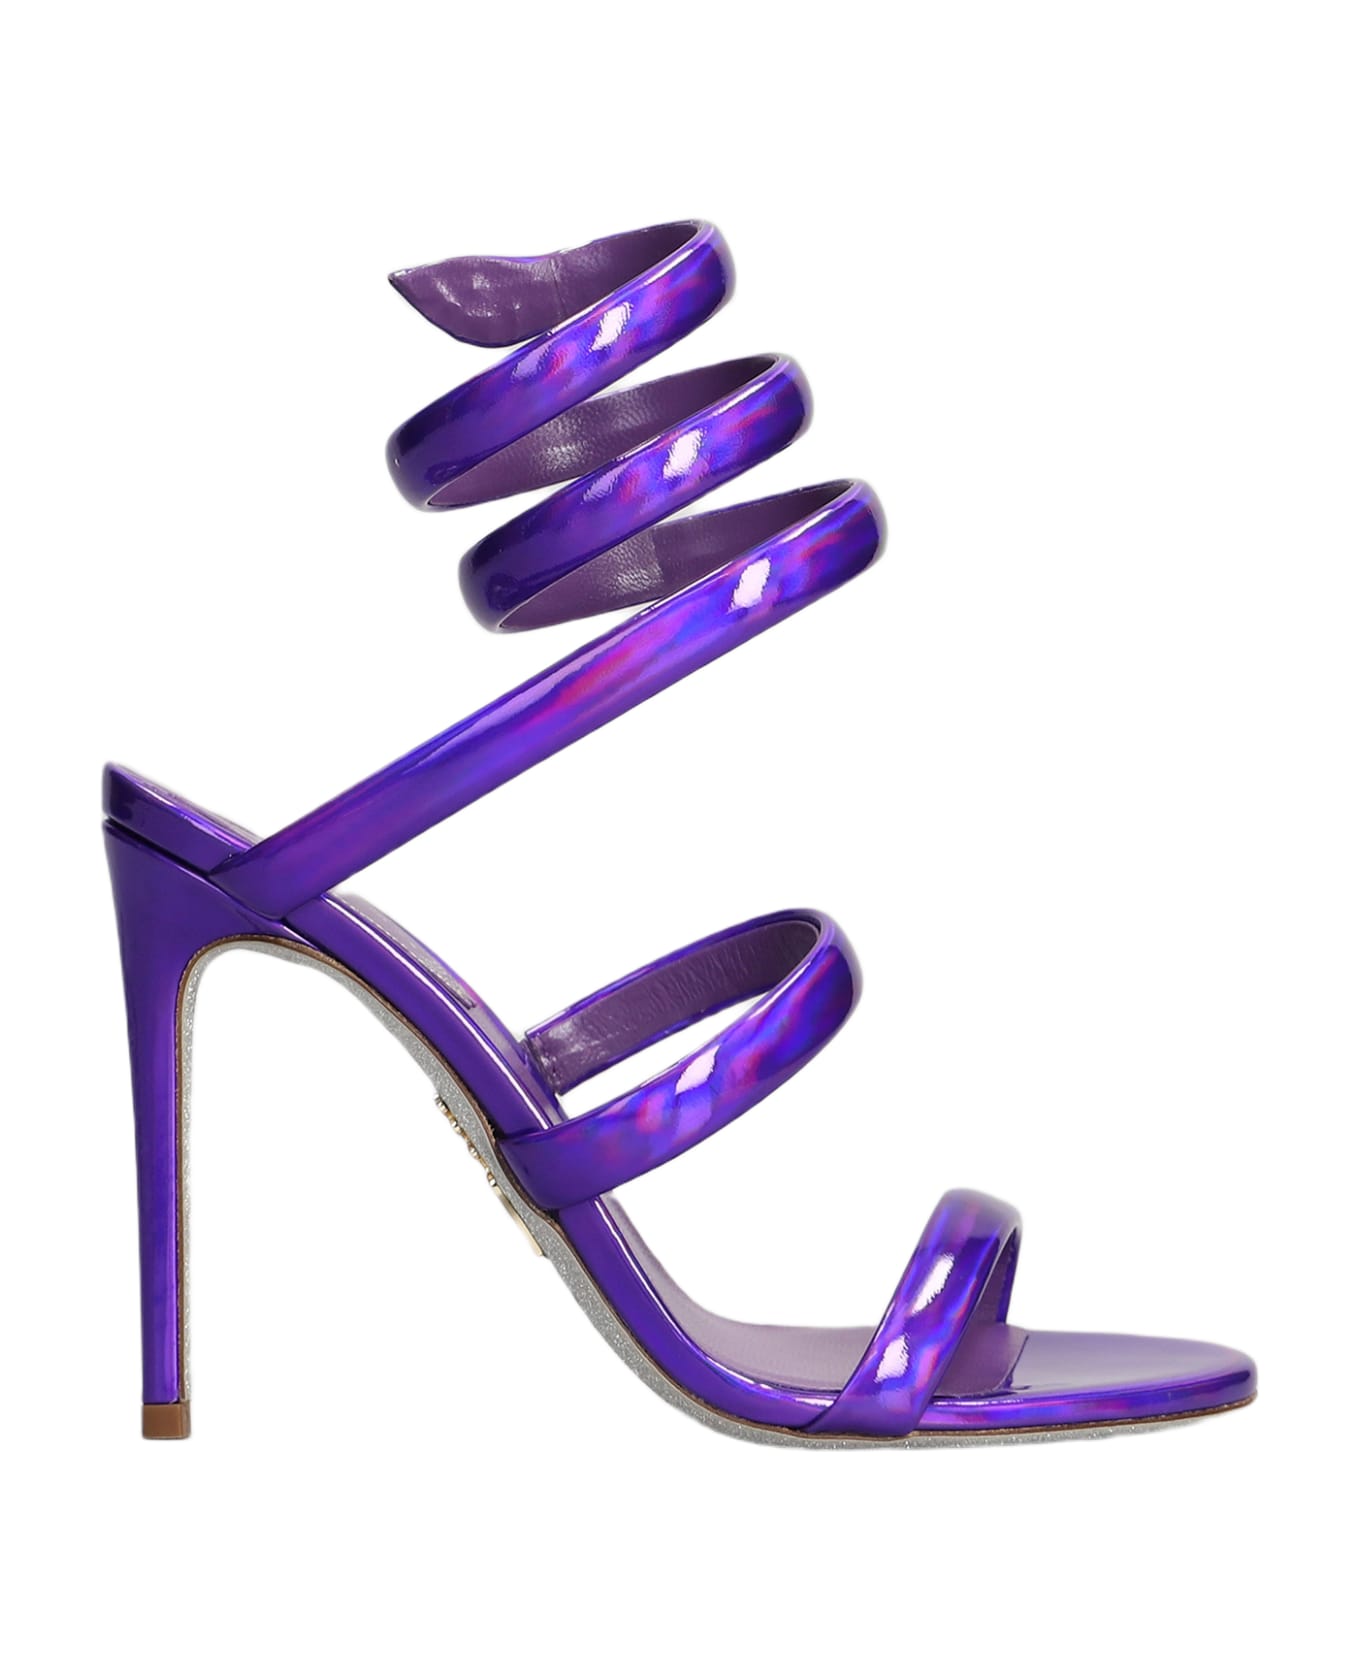 René Caovilla Cleo Sandals In Viola Patent Leather - Viola